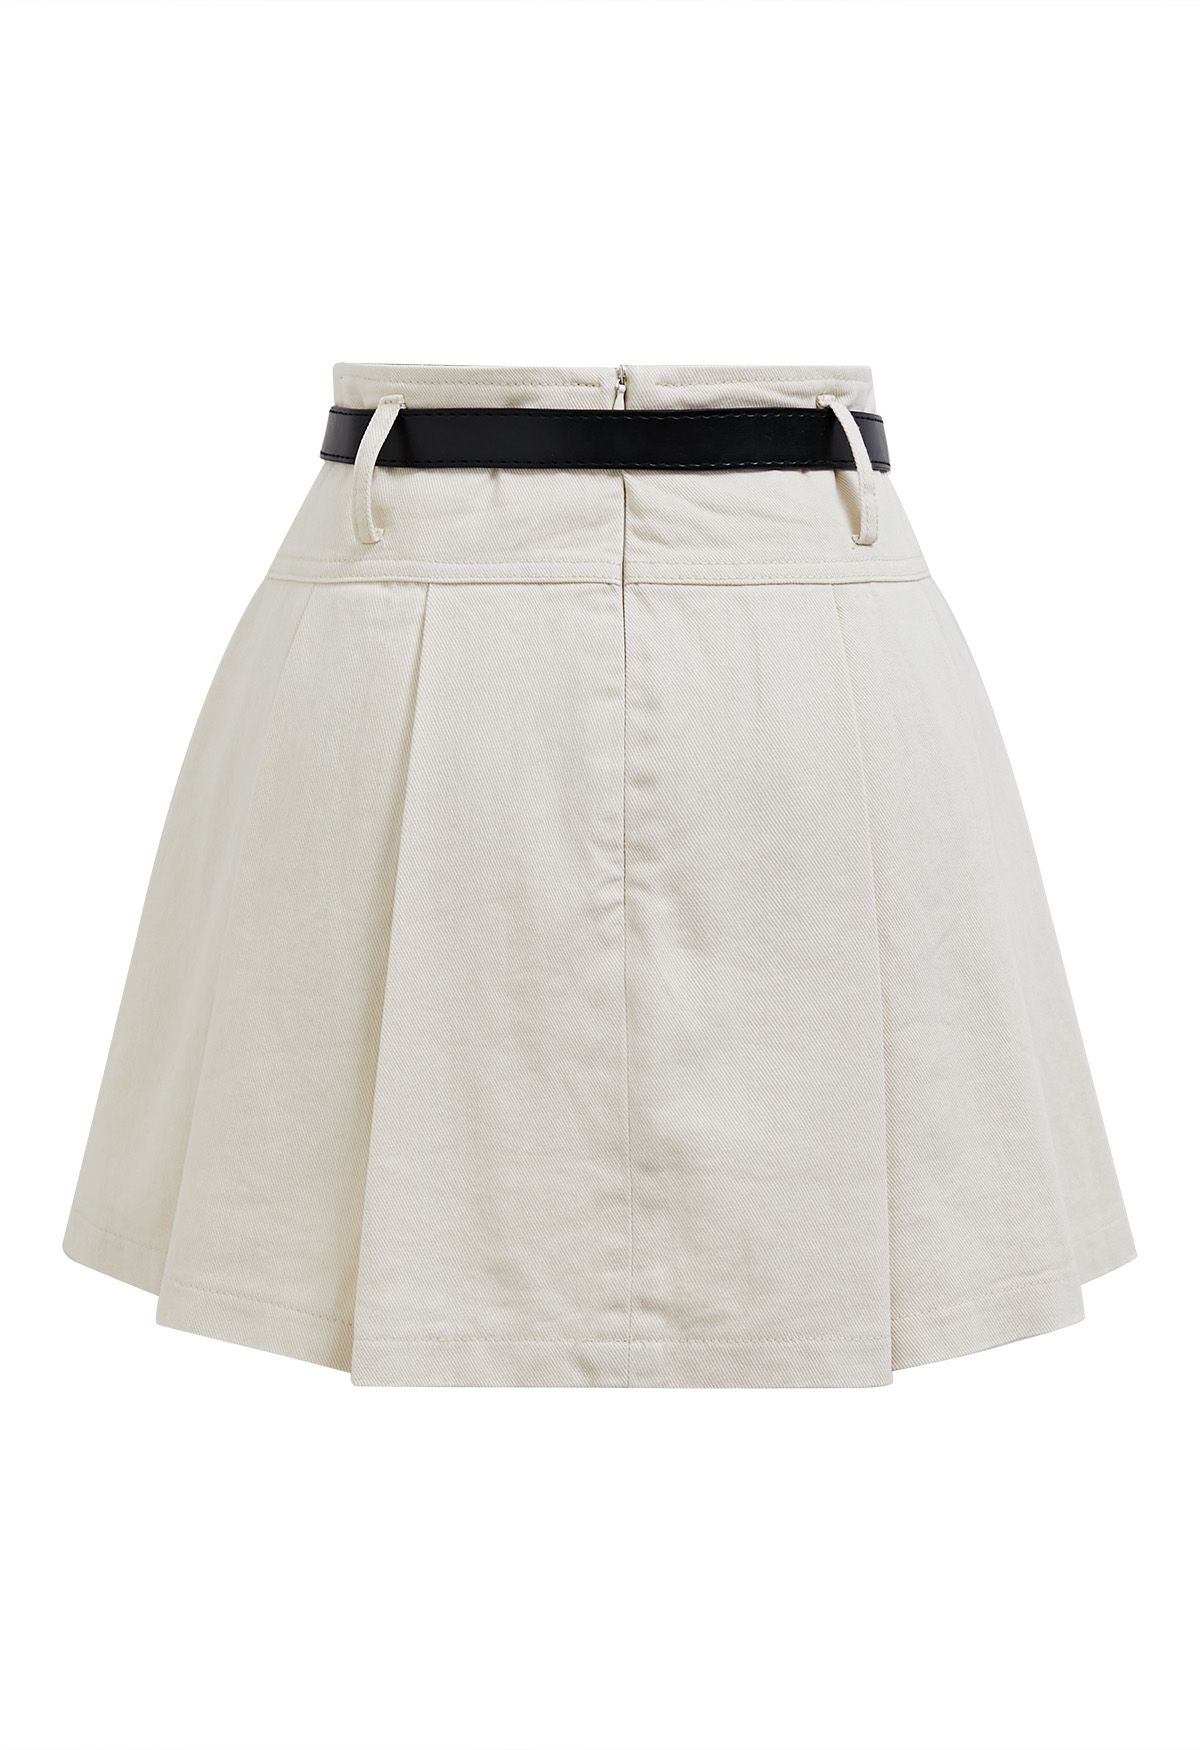 Classic Pleat Denim Mini Skirt with Belt in Ivory